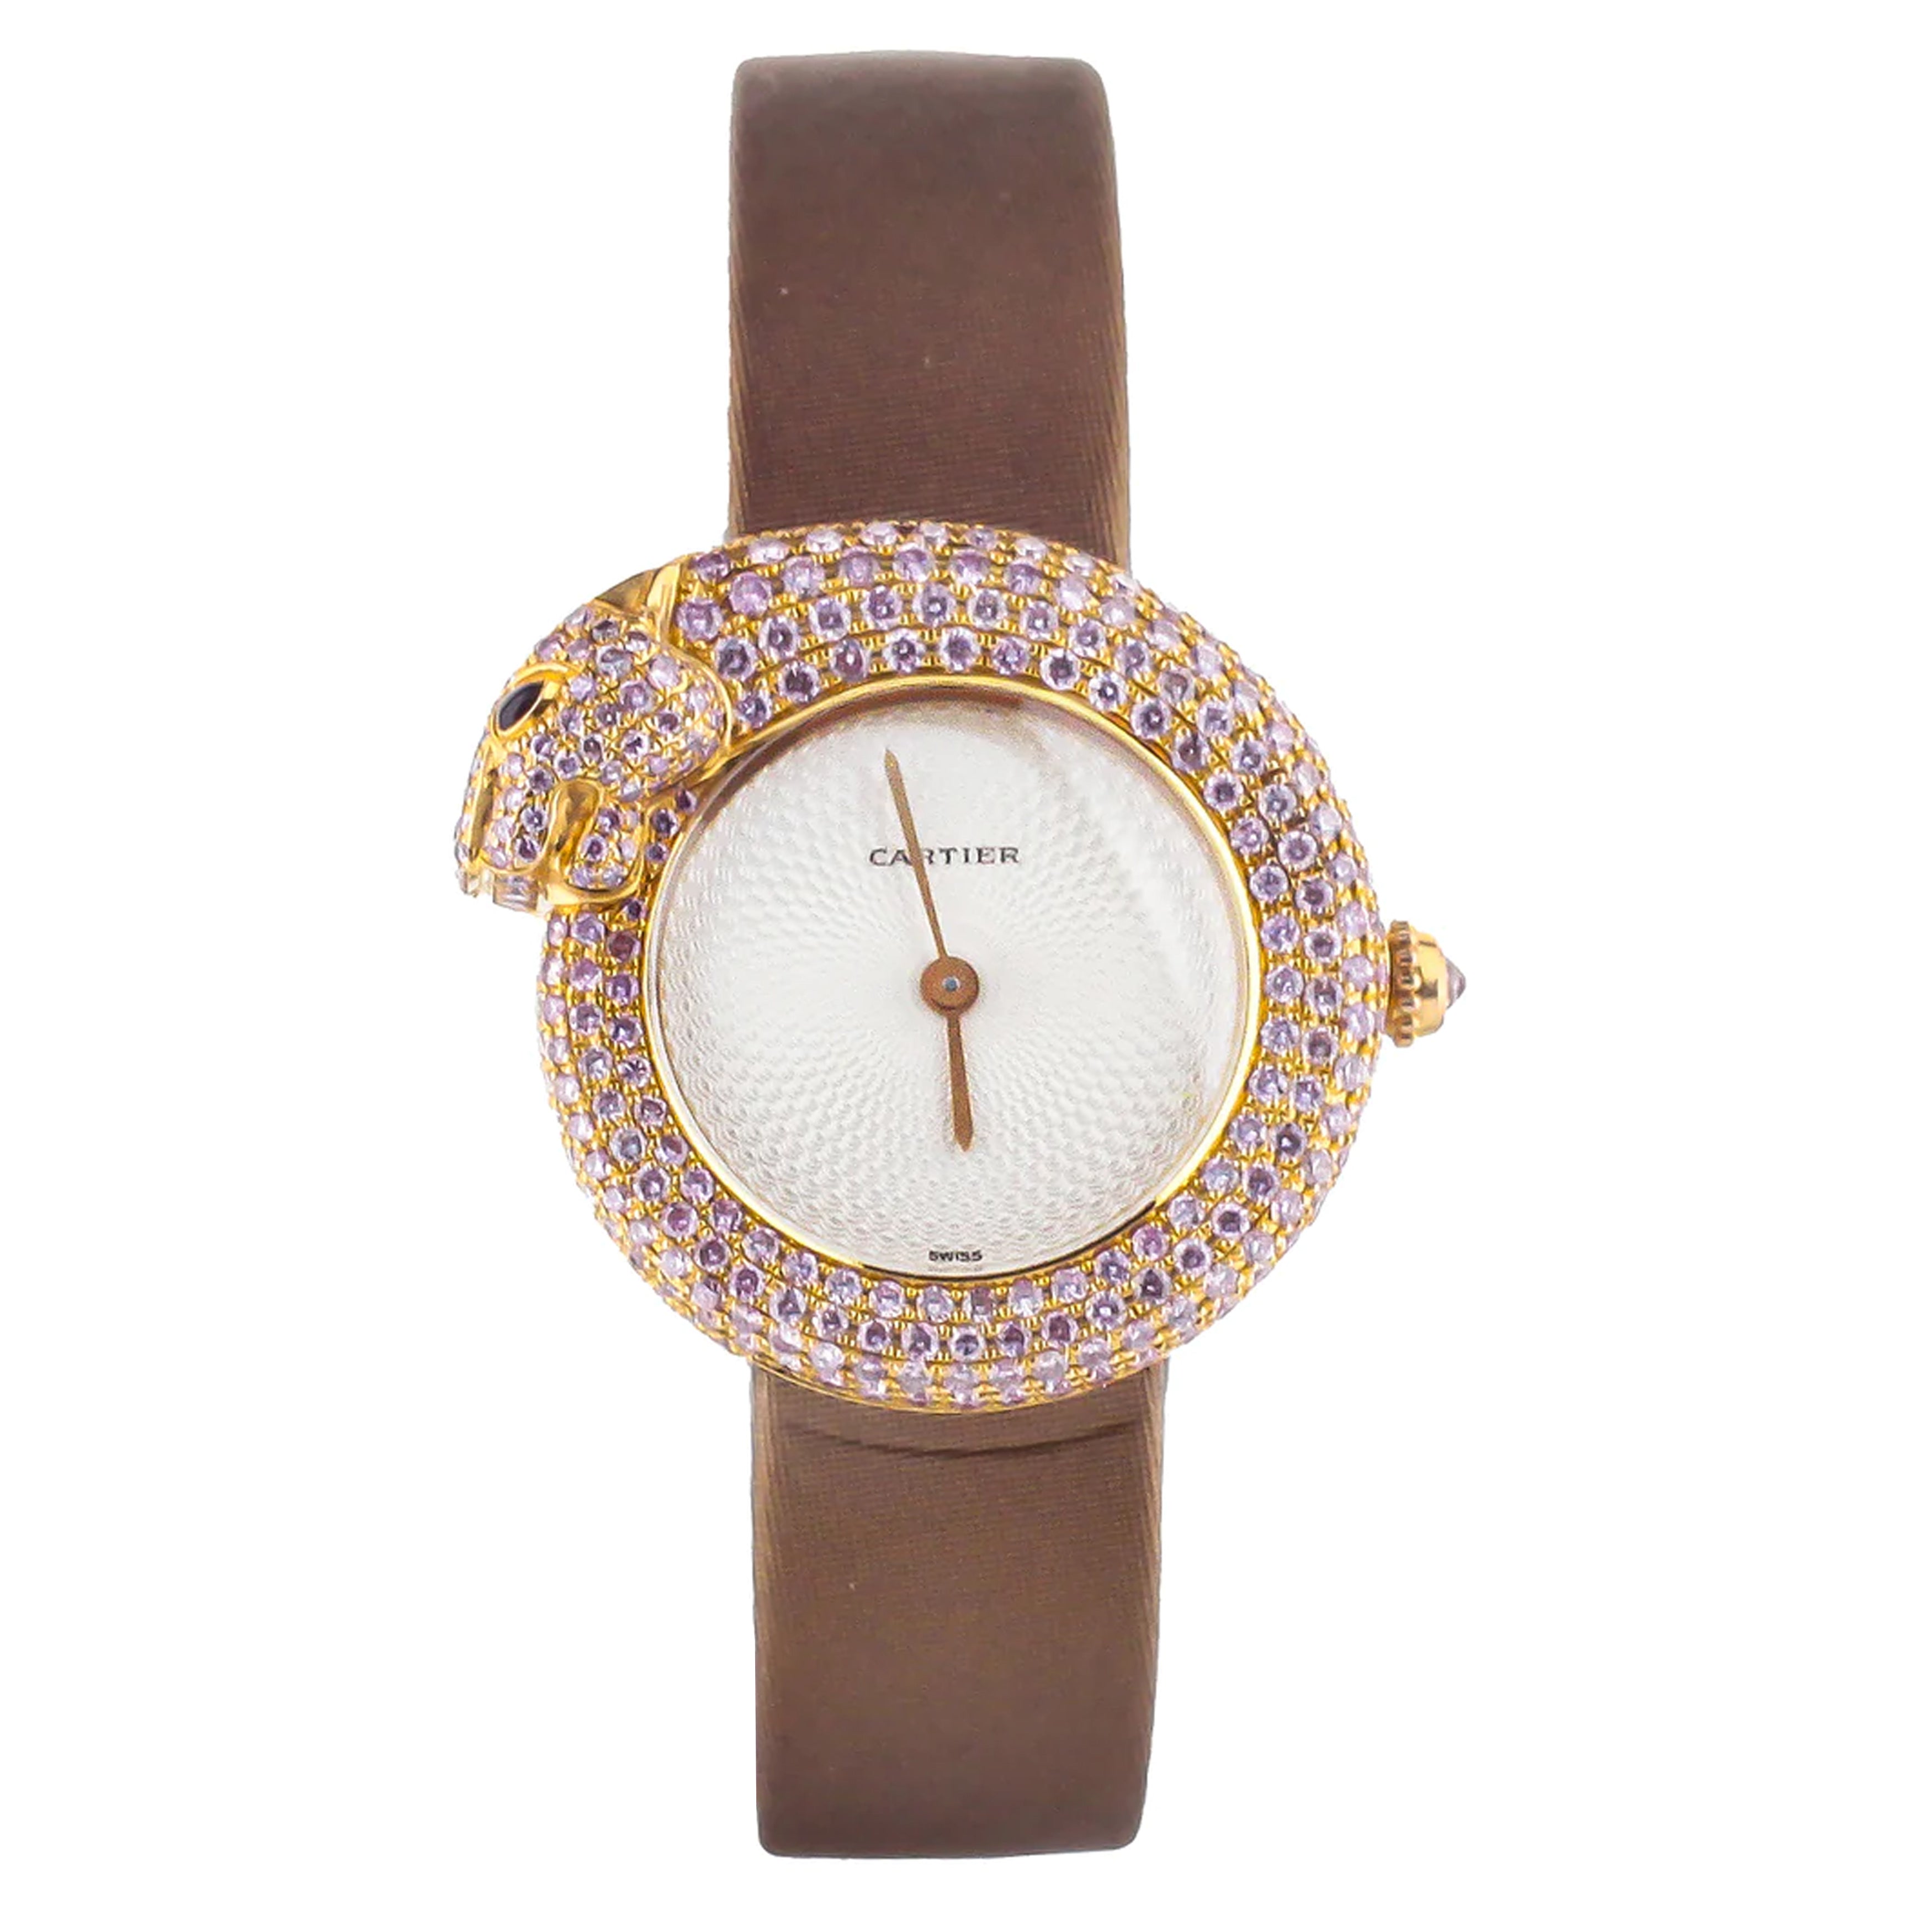 Cartier 1925 Rose Gold Panthere Pink Diamond Watch 2445 DM1157 32mm Fu